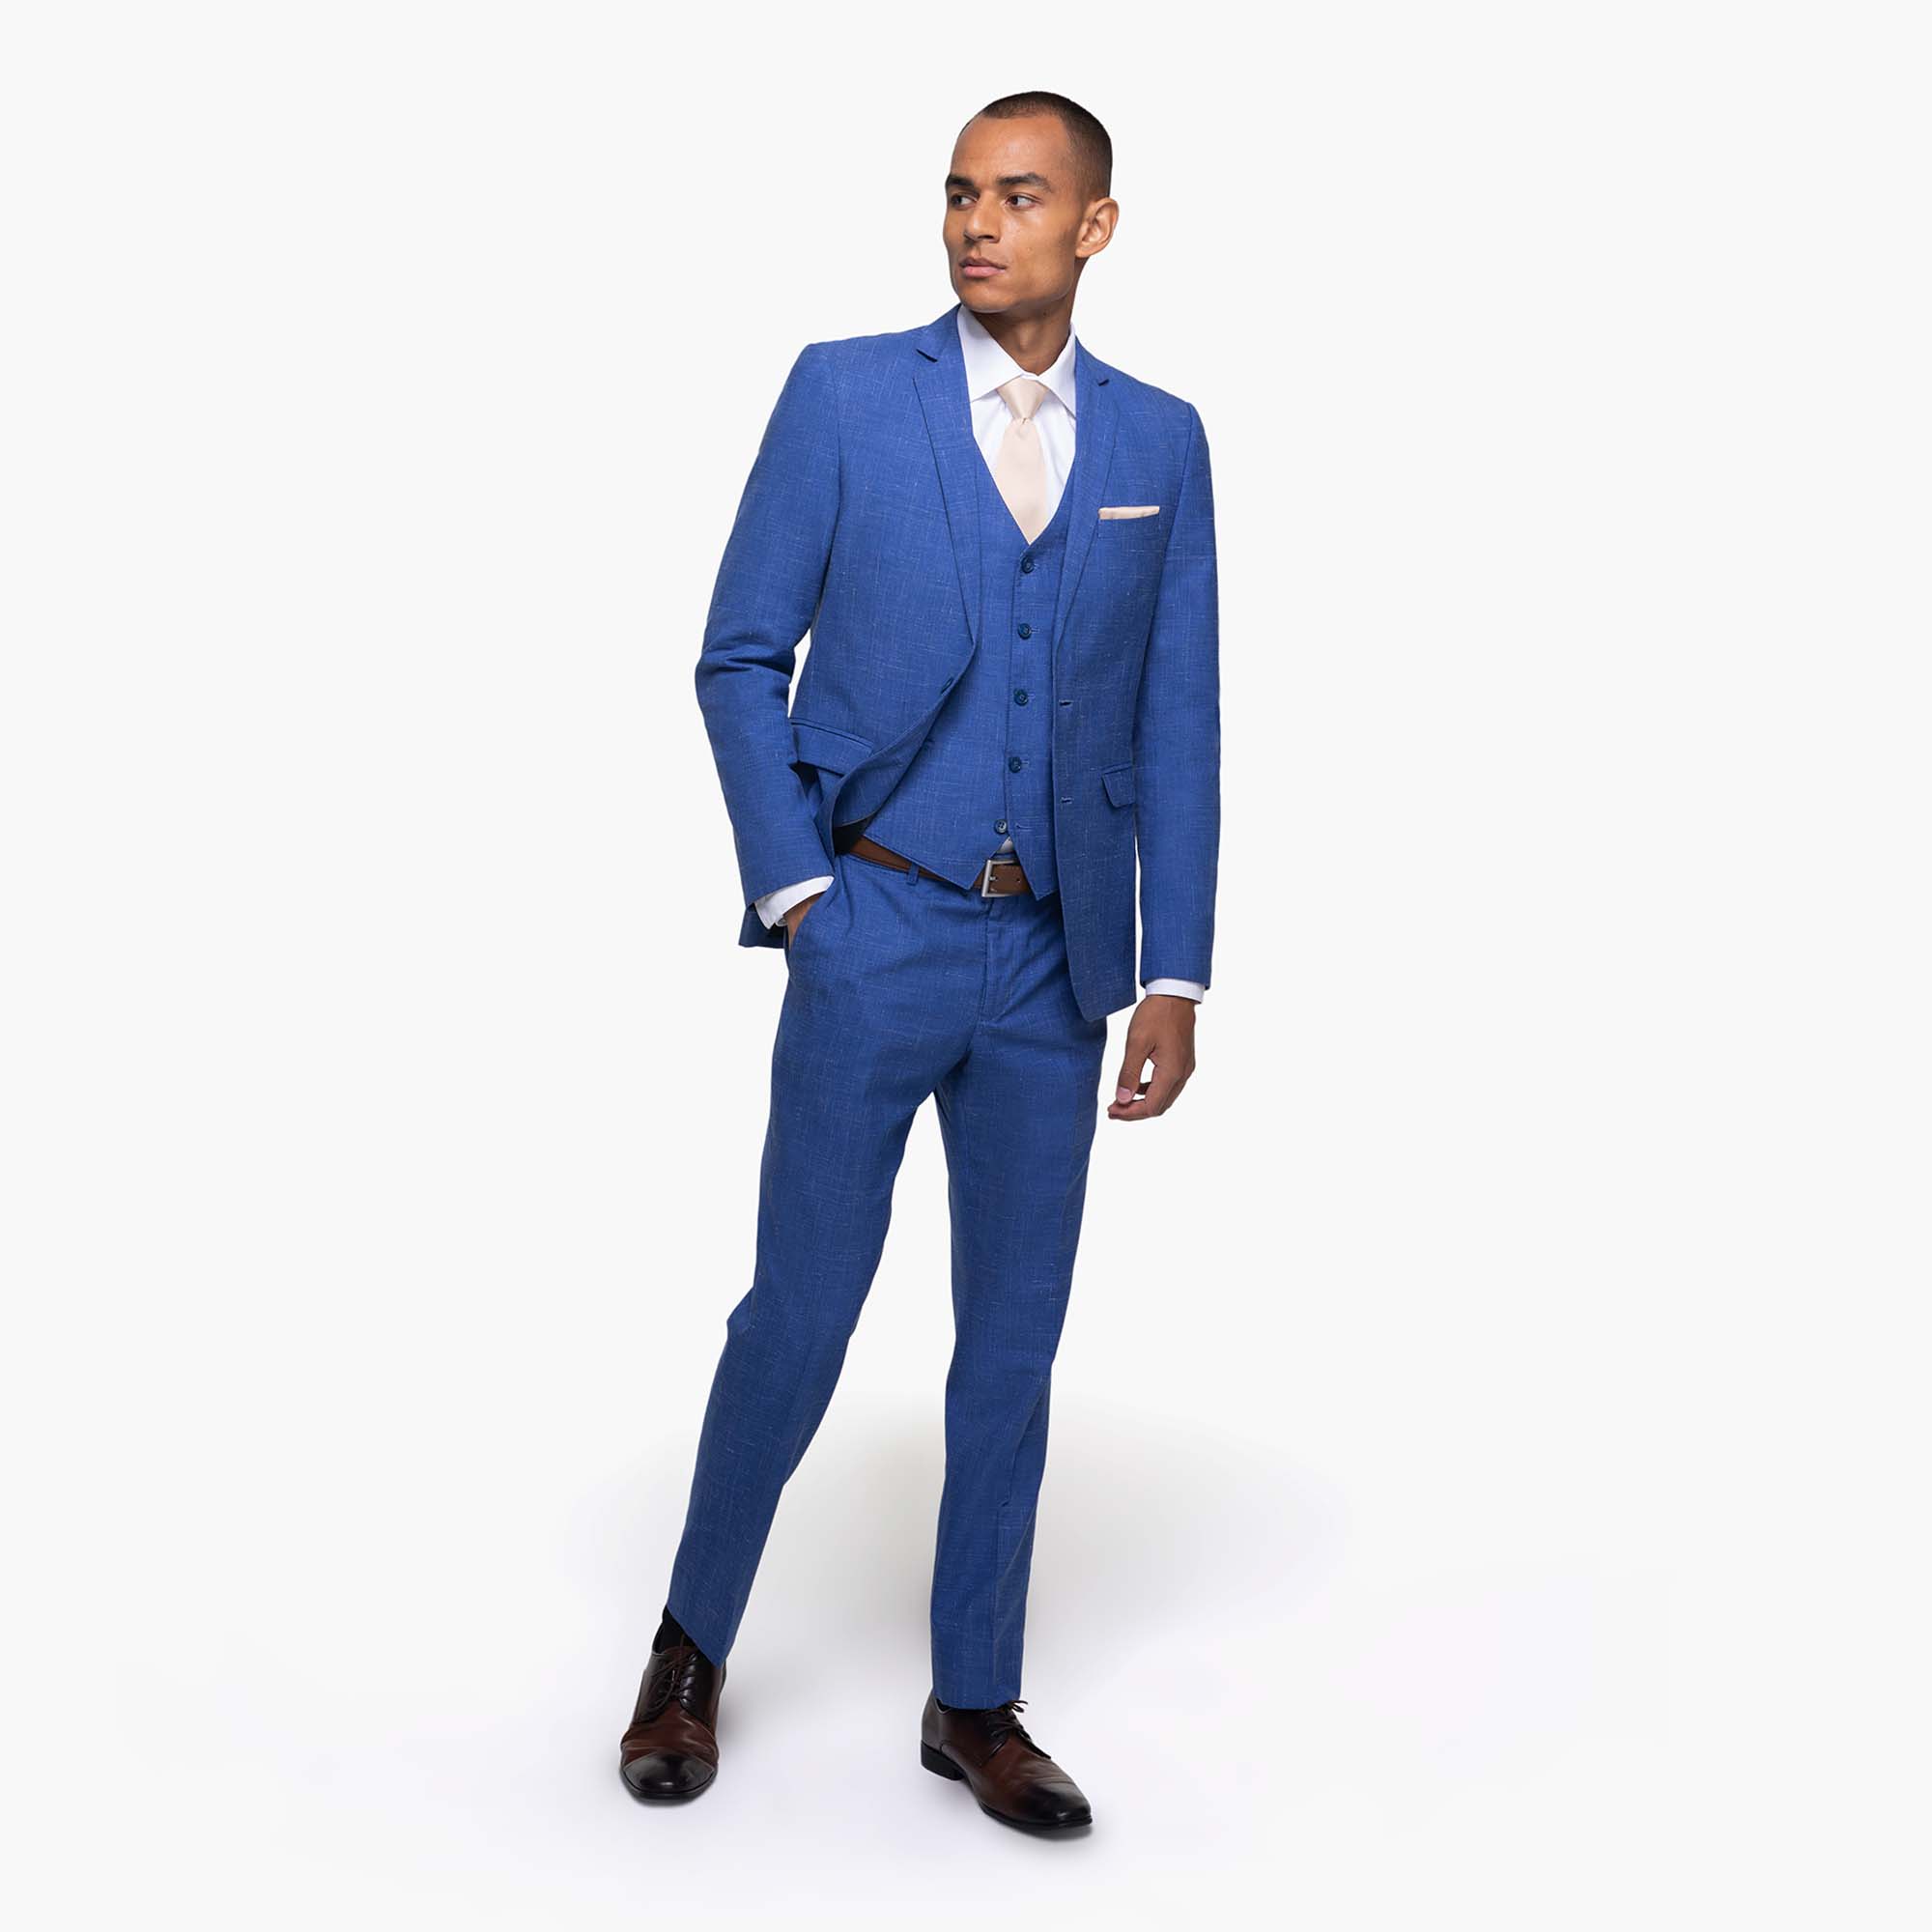 INDIGO BLUE SUIT - Classy Formal Wear